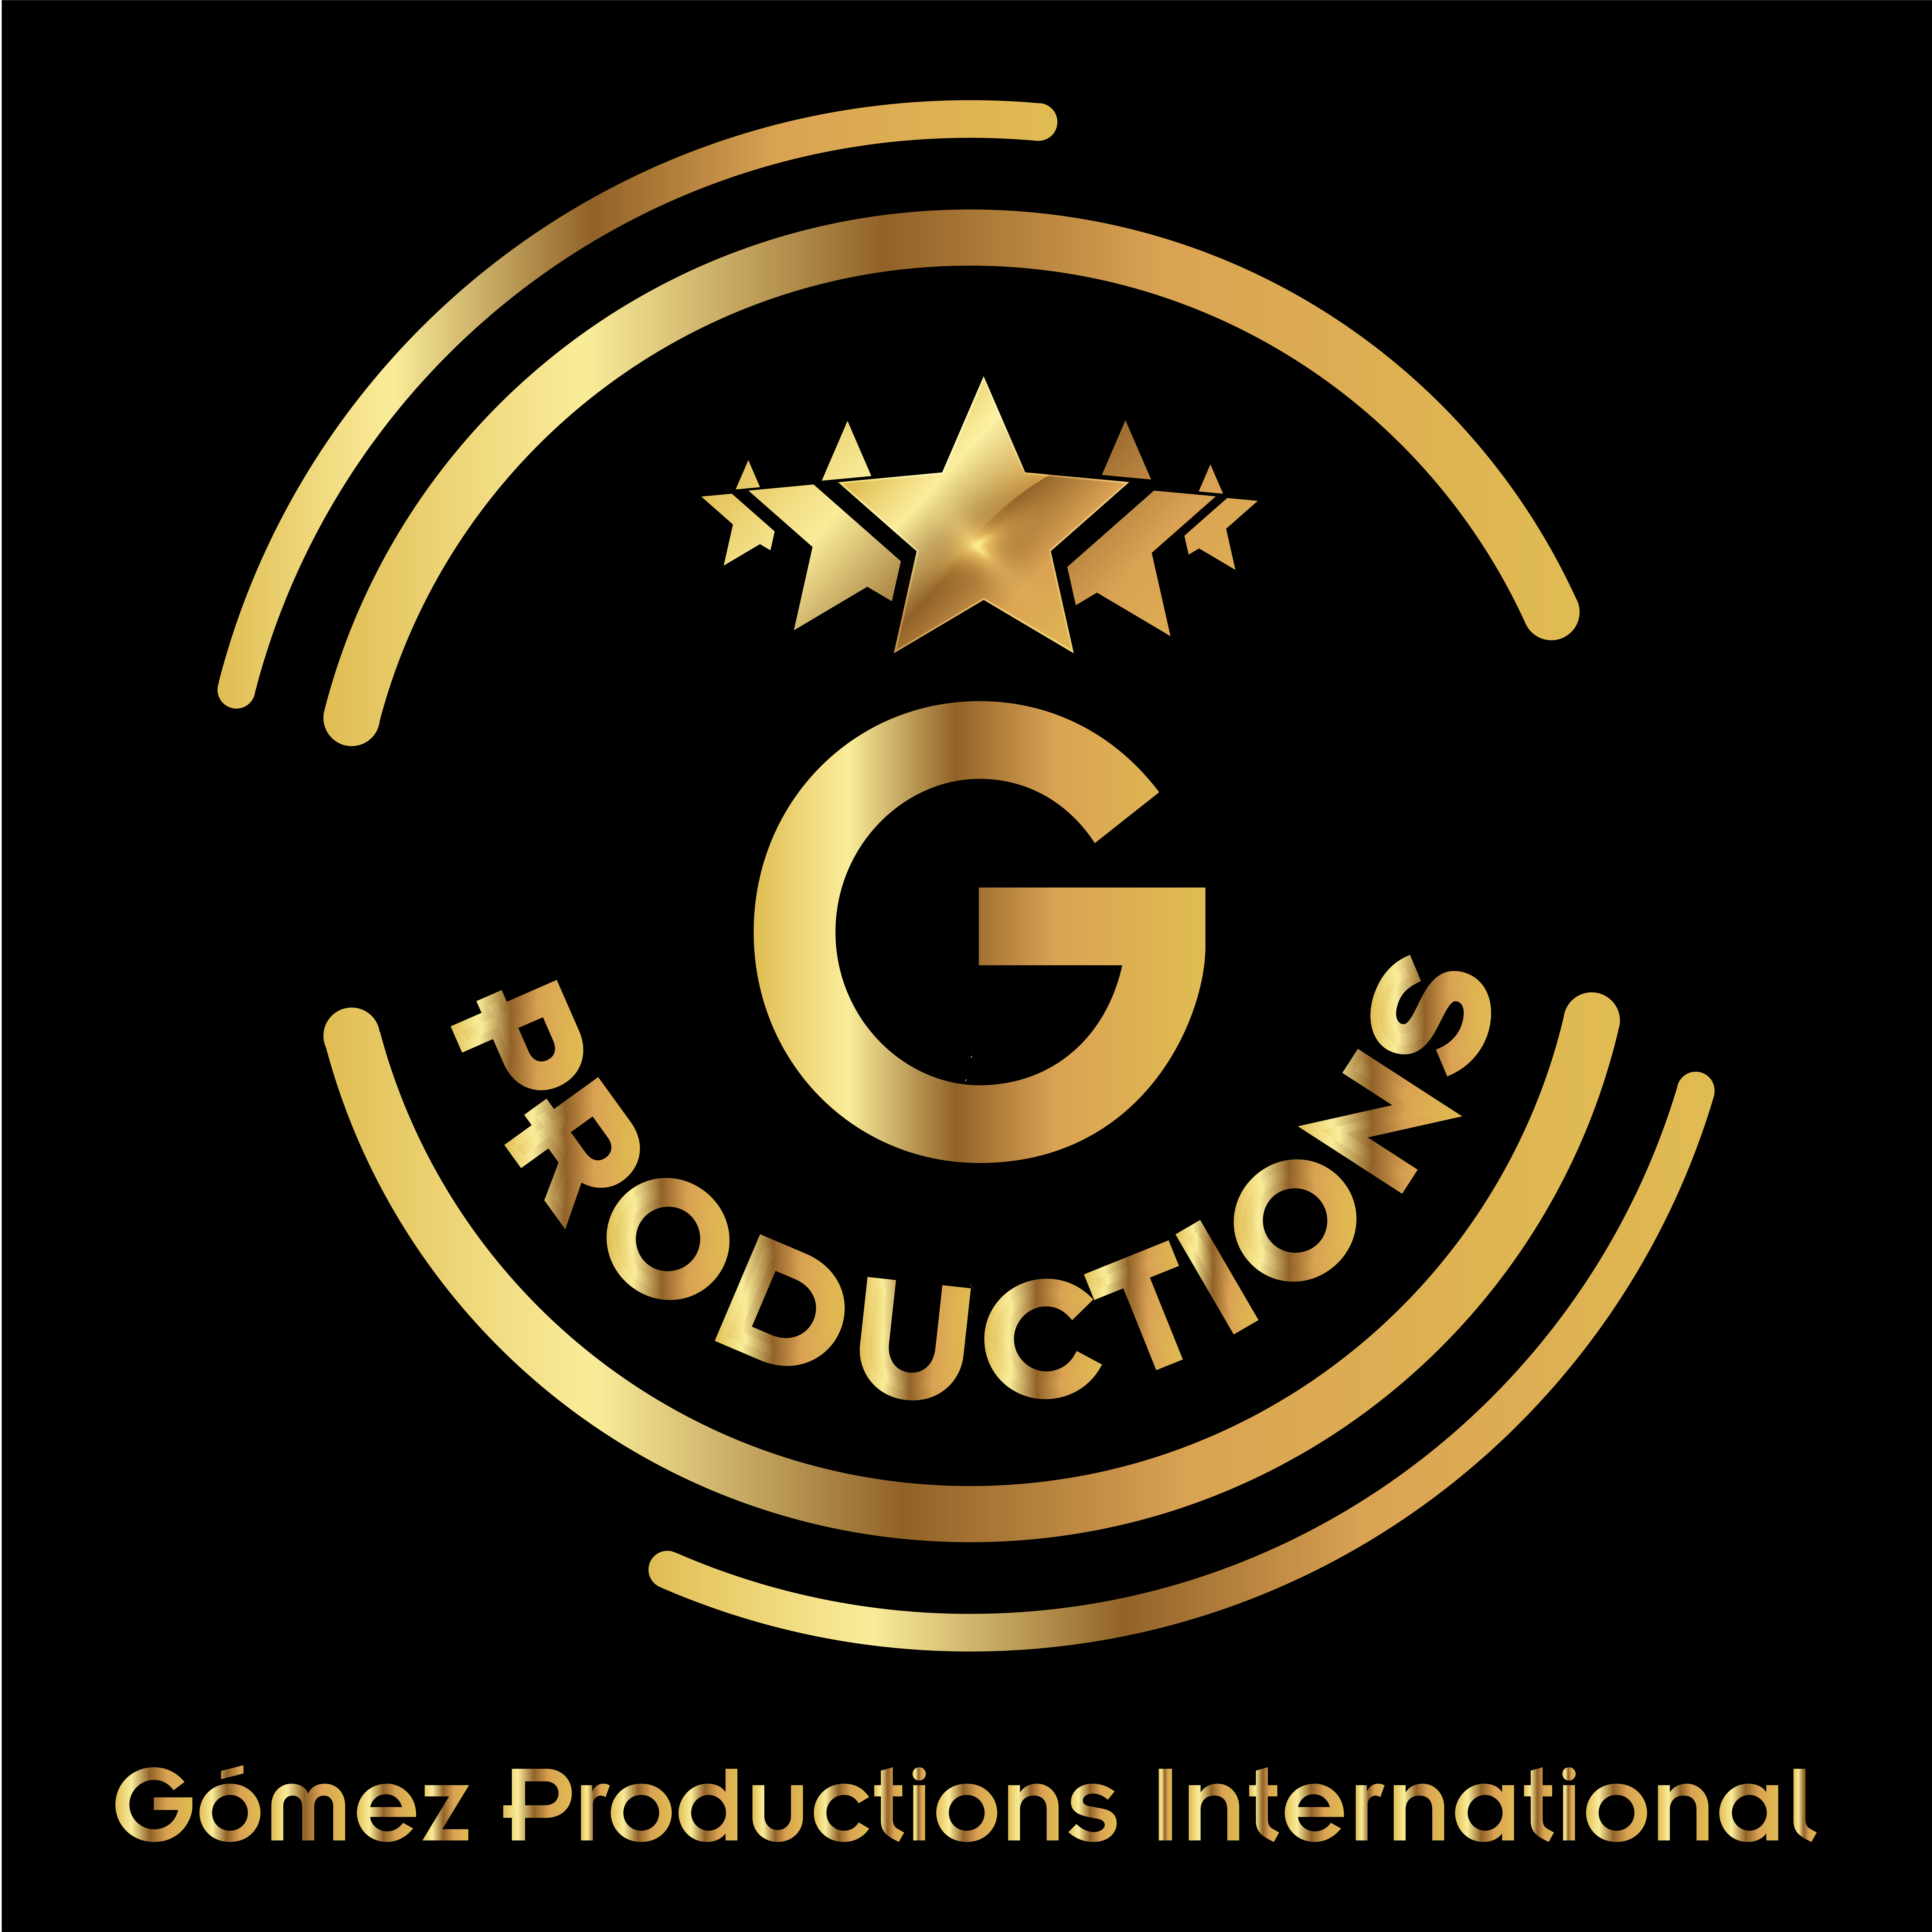 GOMEZ PRODUCTIONS